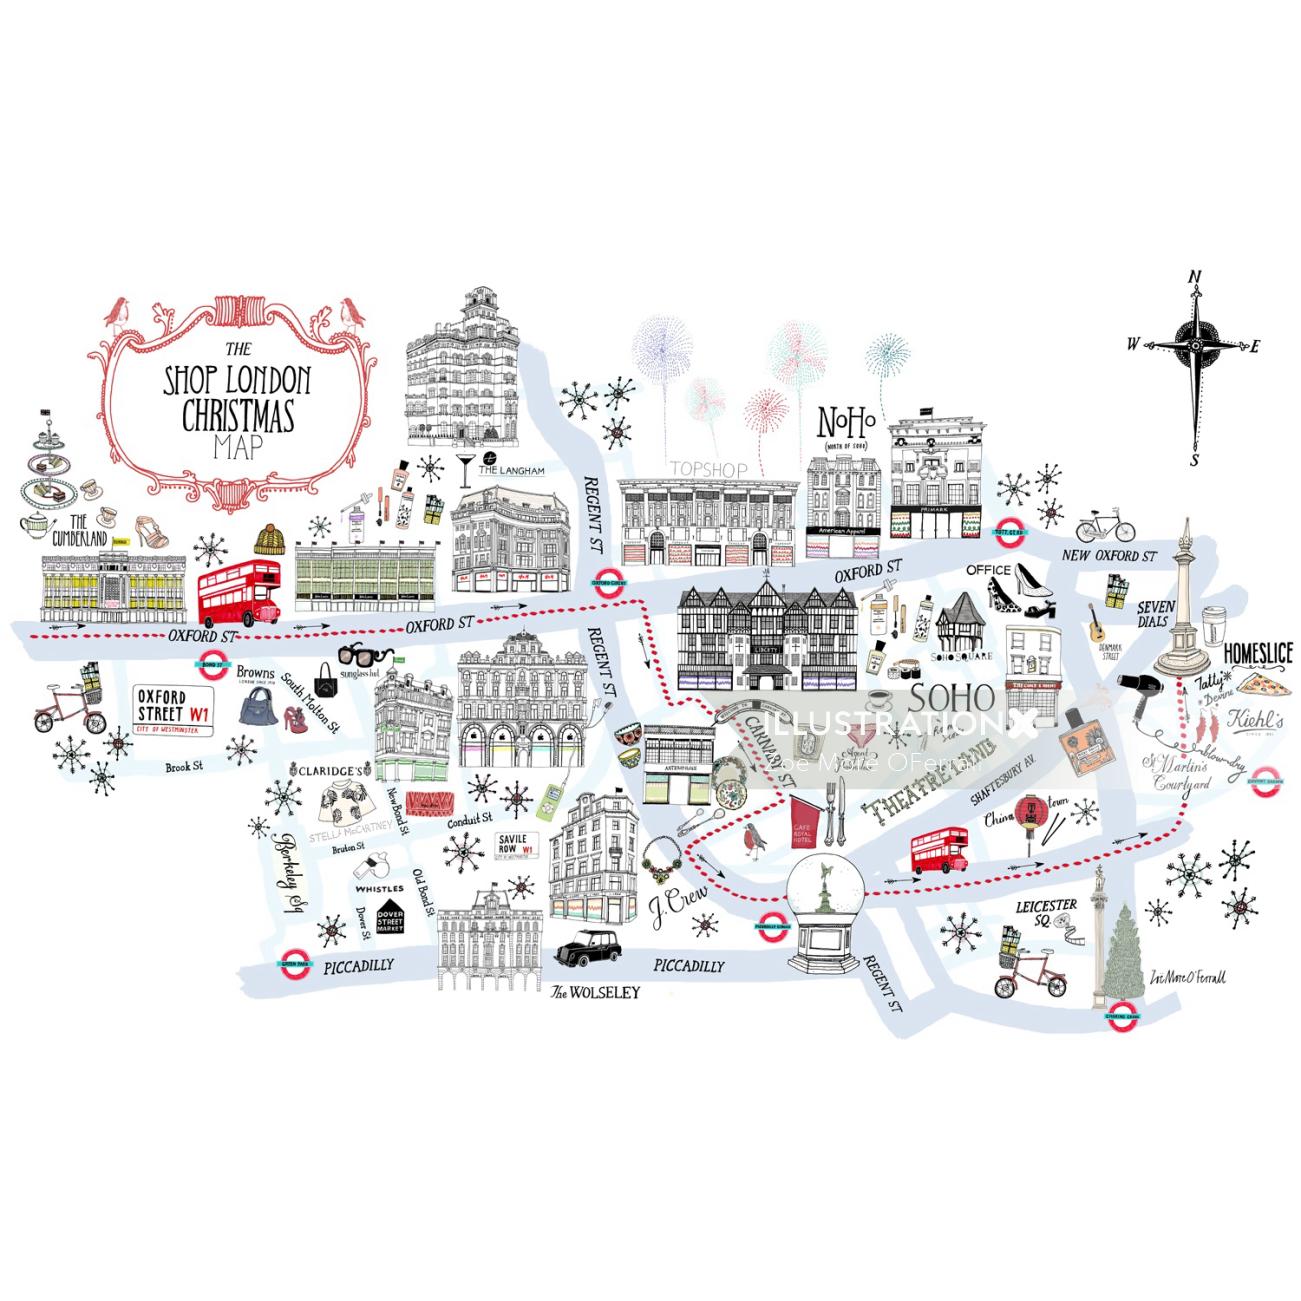 The Shop London Christmas Map
